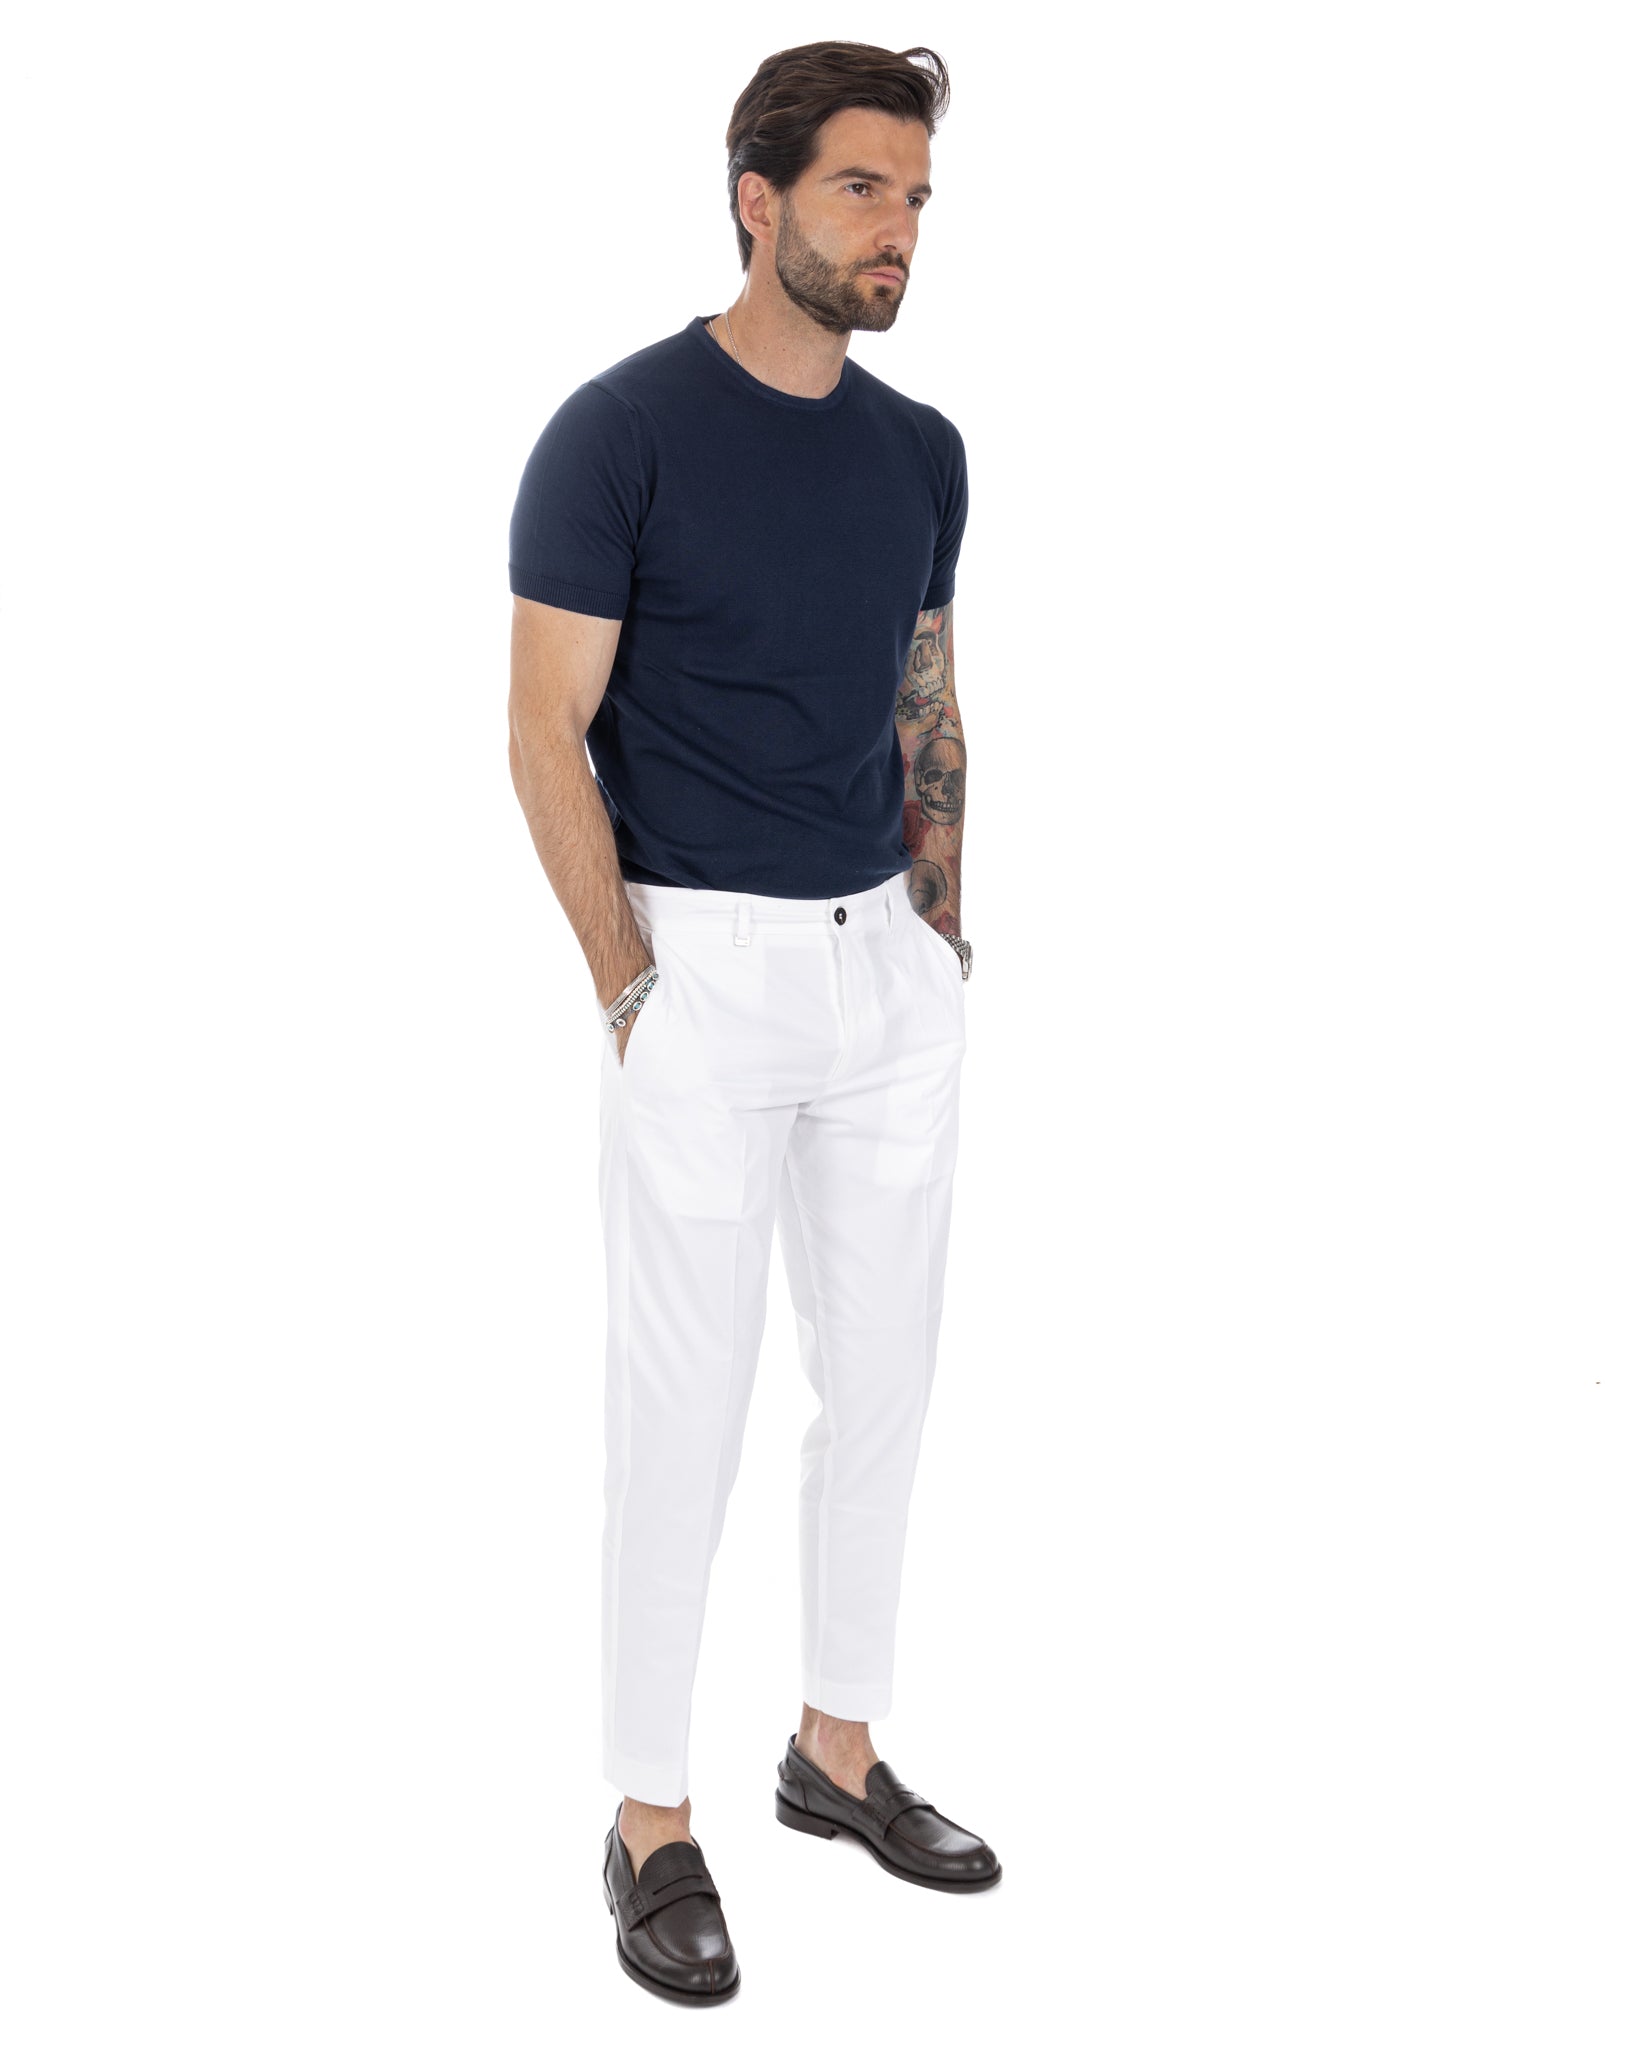 Elder - white capri trousers in summer cotton